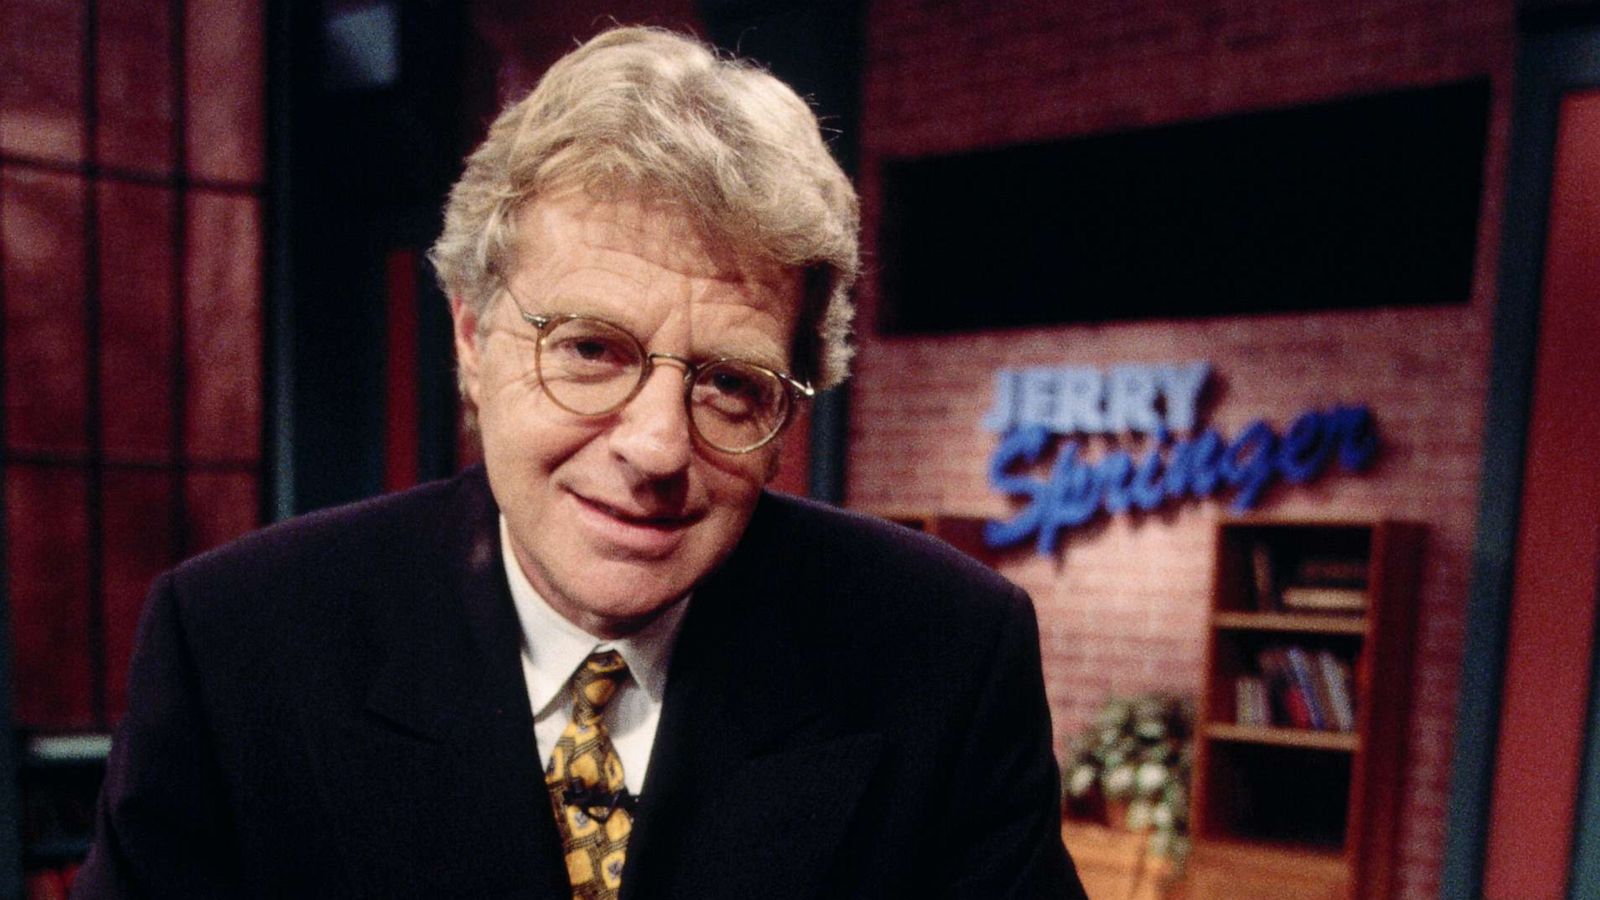 Jerry Springer, longtime talk show host, dies at 79 - ABC News